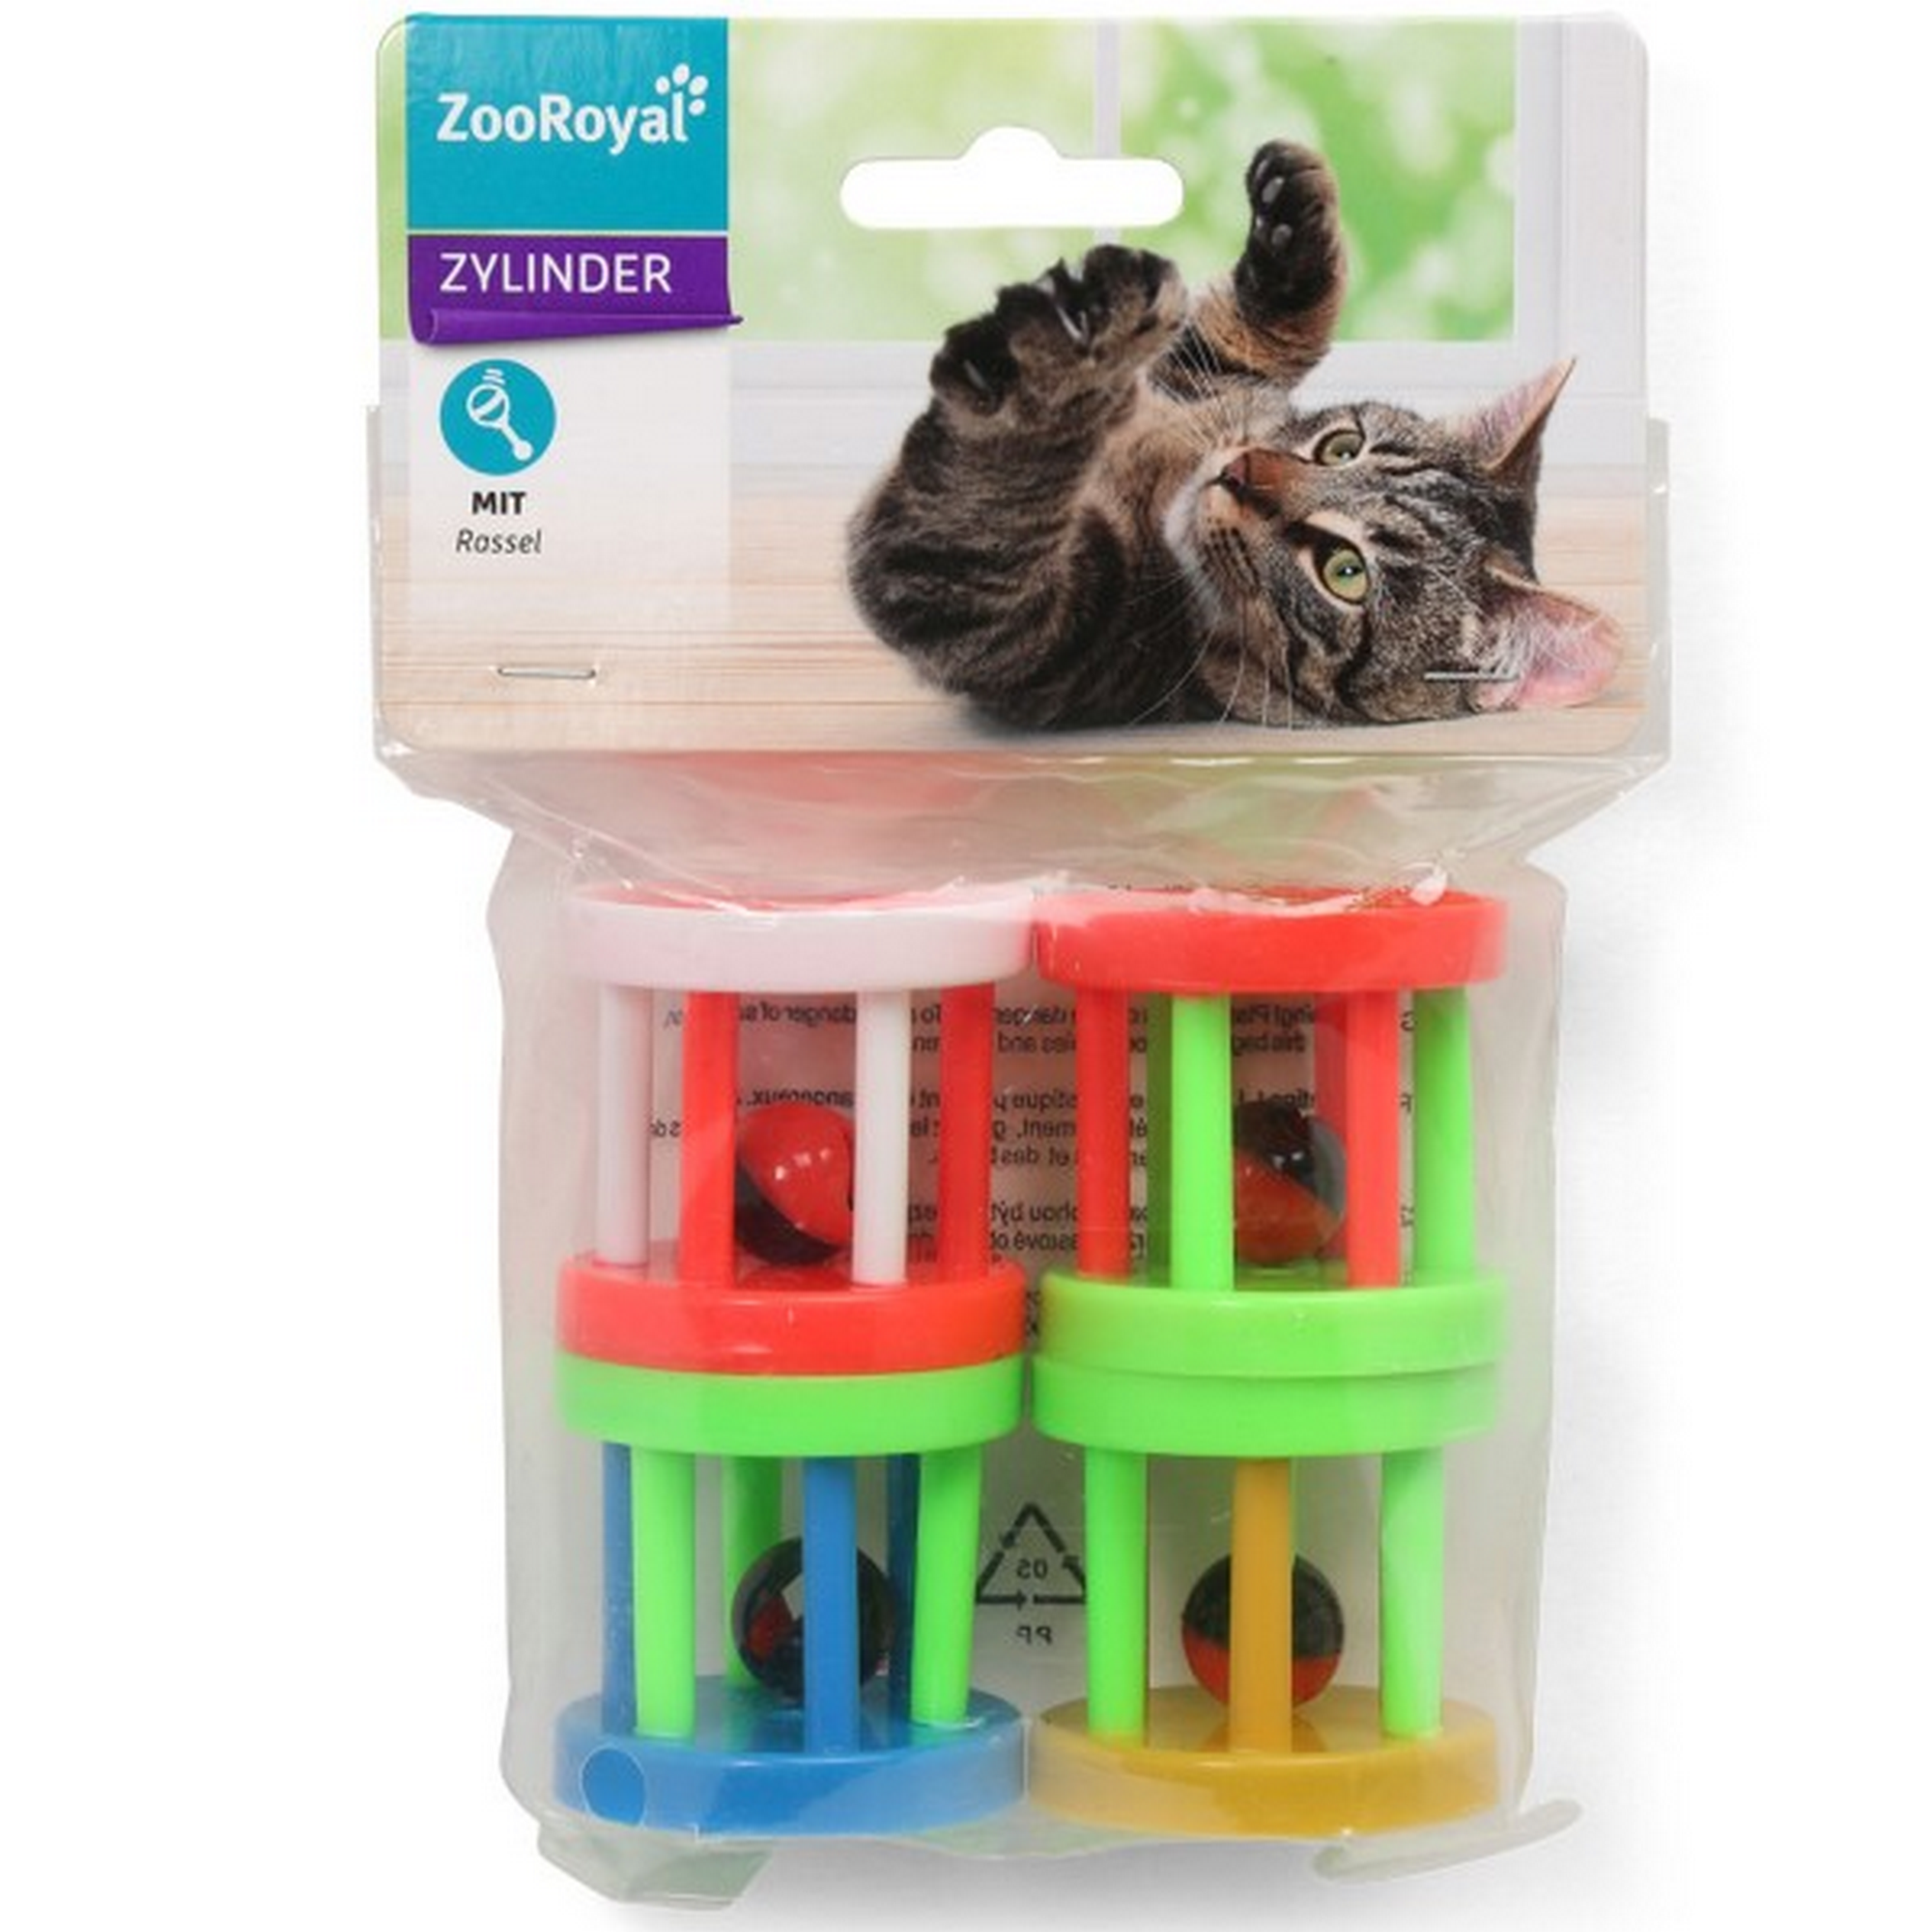 Katzenspielzeug mit Rassel zylinderförmig bunt 45 mm 4 Stück + product picture